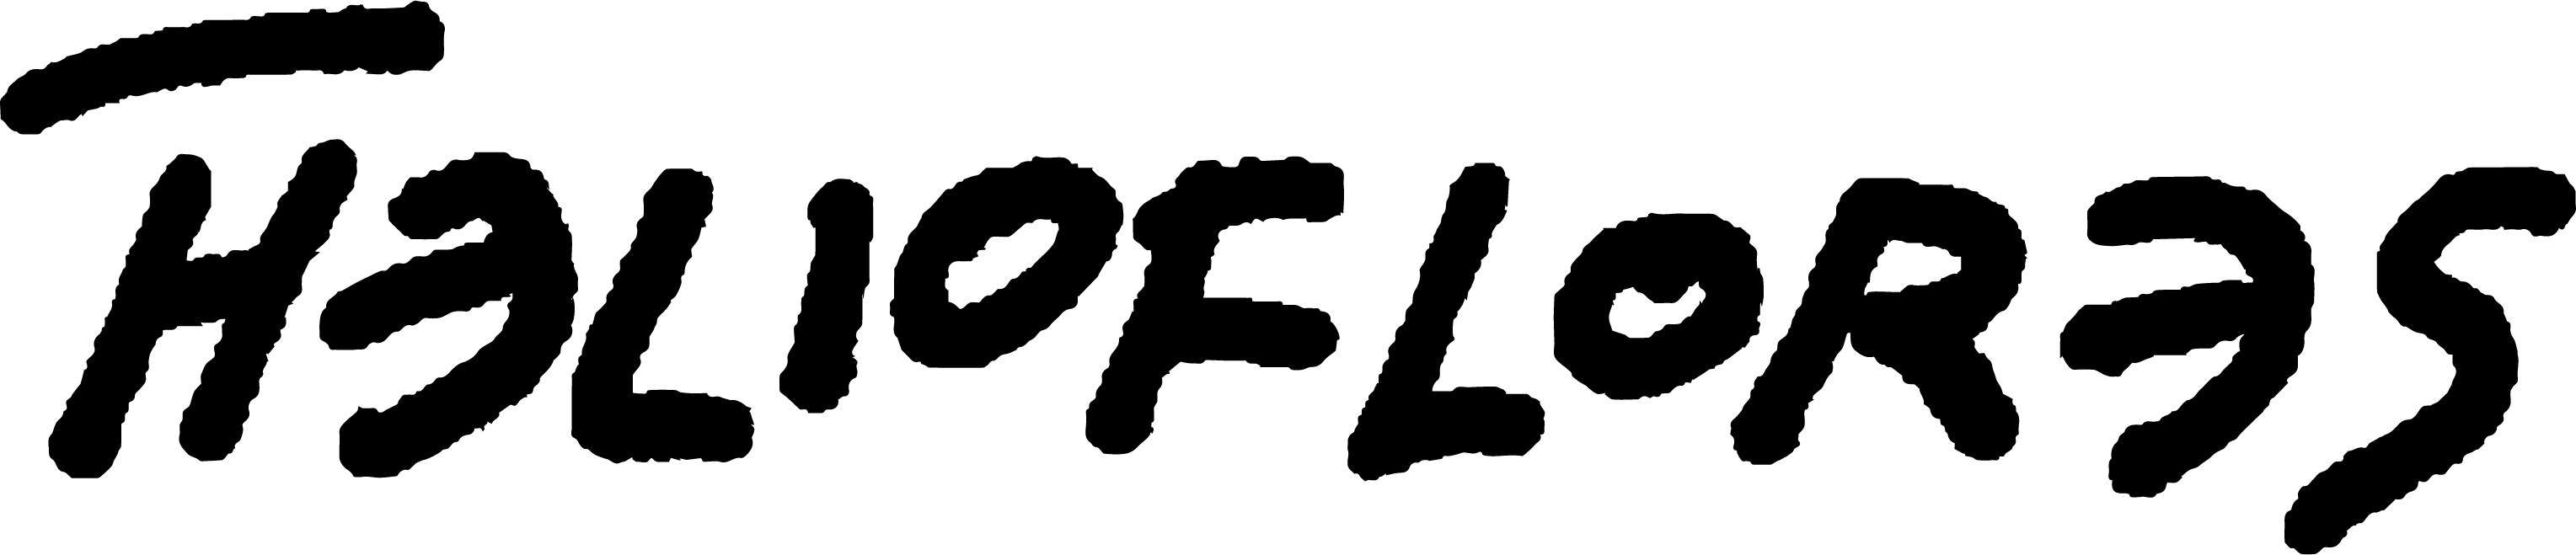 Helioflores logo